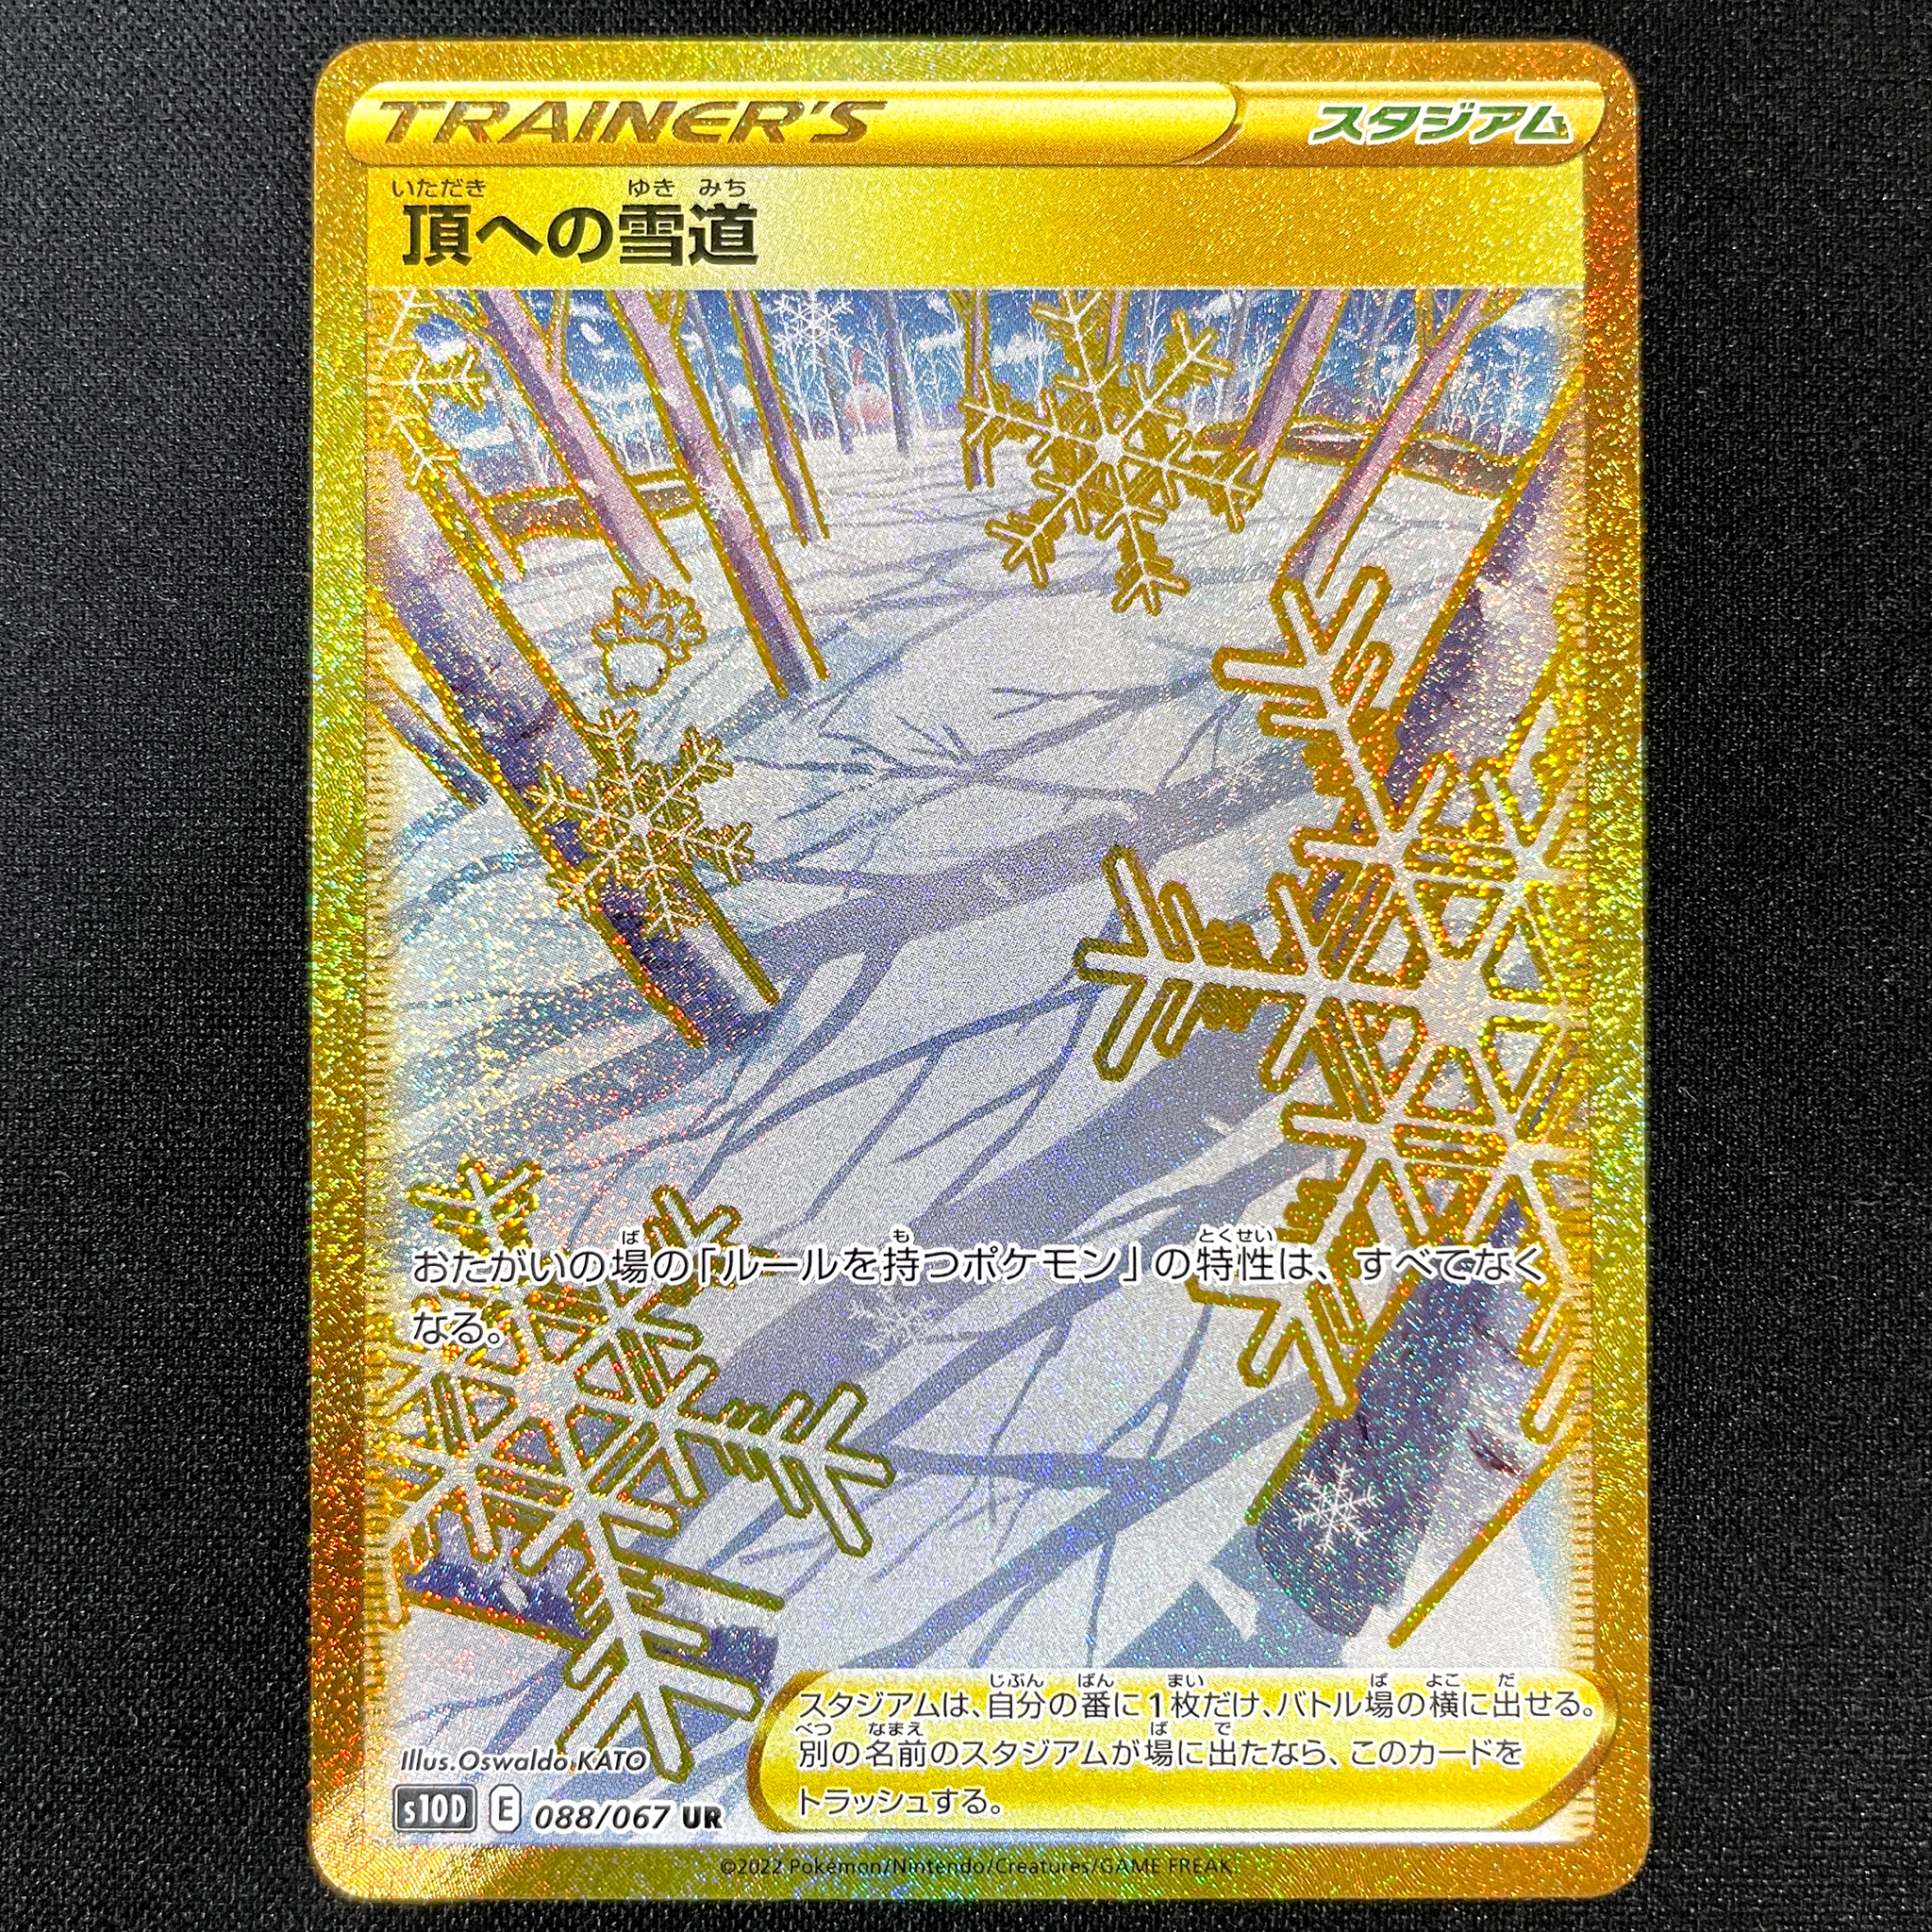 POKÉMON CARD GAME Sword & Shield Expansion pack ｢Time Gazer｣  POKÉMON CARD GAME s10D 088/067 Ultra Rare card  Path to the Peak